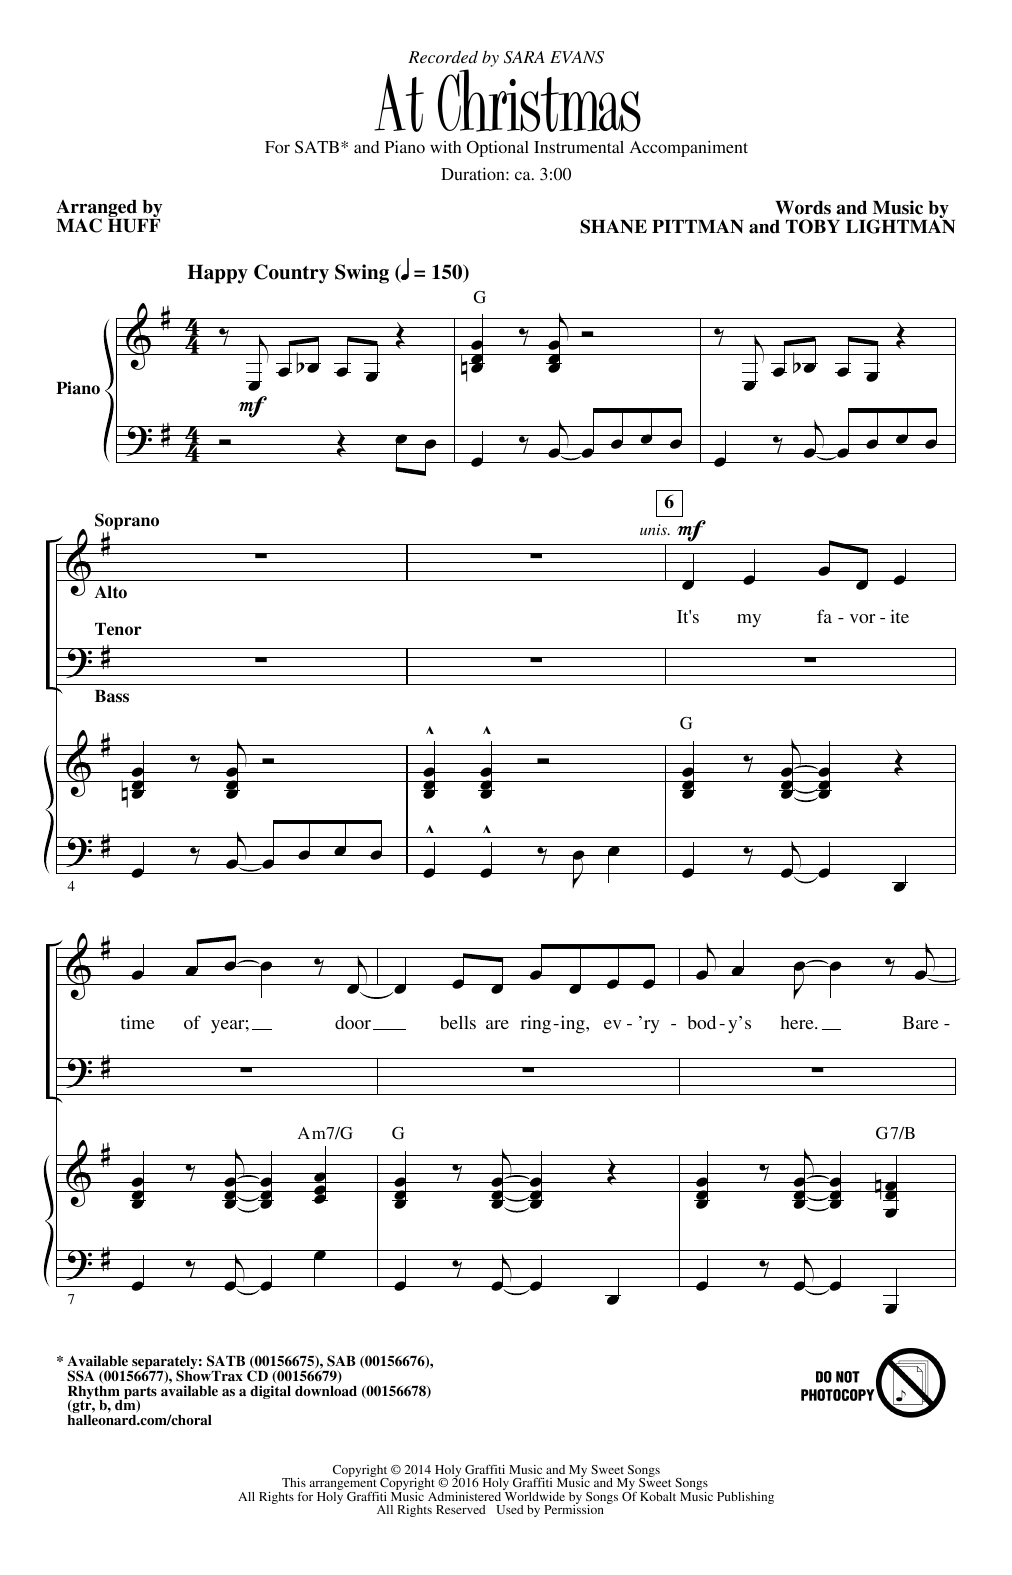 Sara Evans At Christmas (arr. Mac Huff) Sheet Music Notes & Chords for SSA - Download or Print PDF